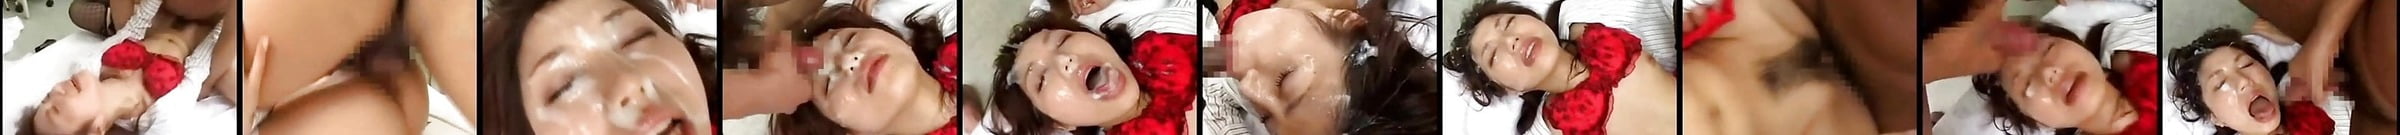 Jav Idol Porn Videos Xhamster